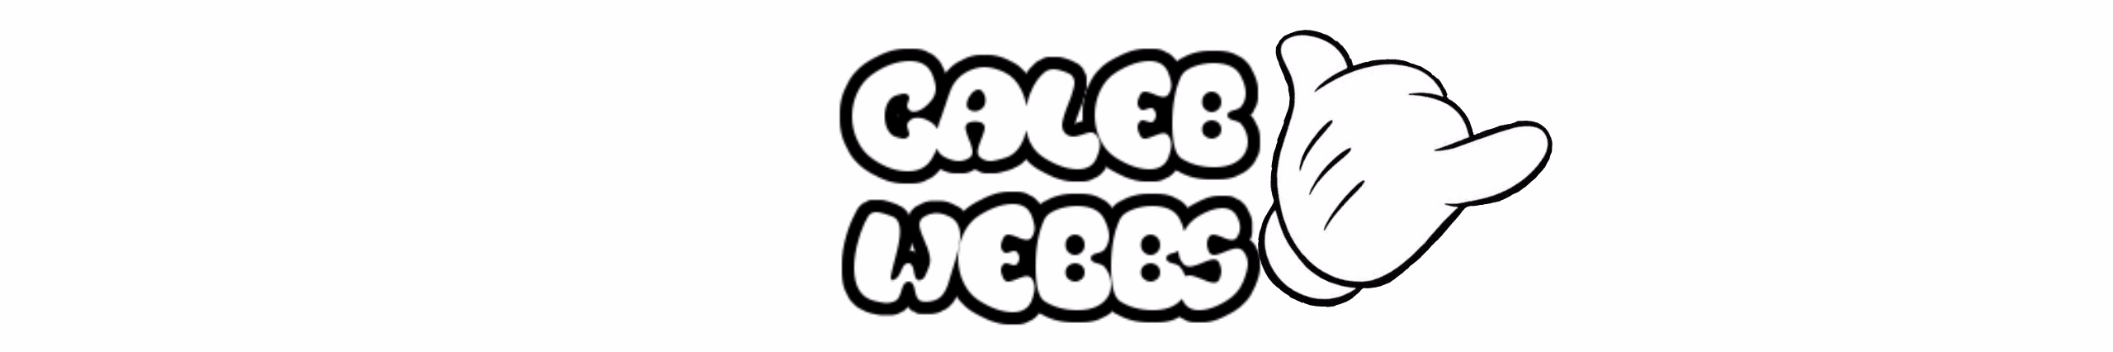 Caleb Webbs